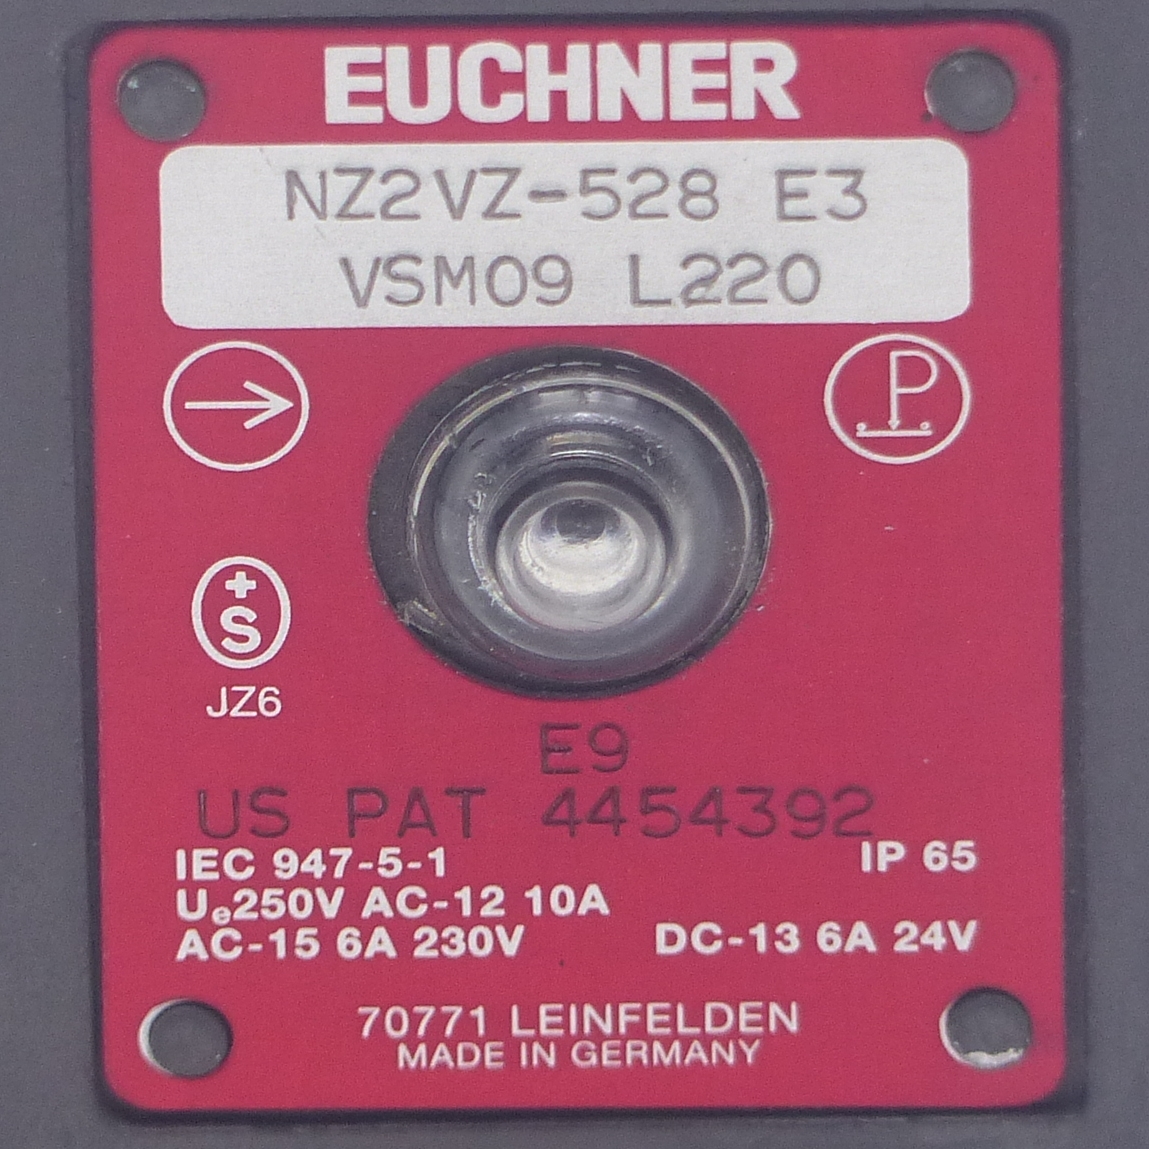 Sicherheitsschalter NZ2VZ-528 E3 VSM09 L220 